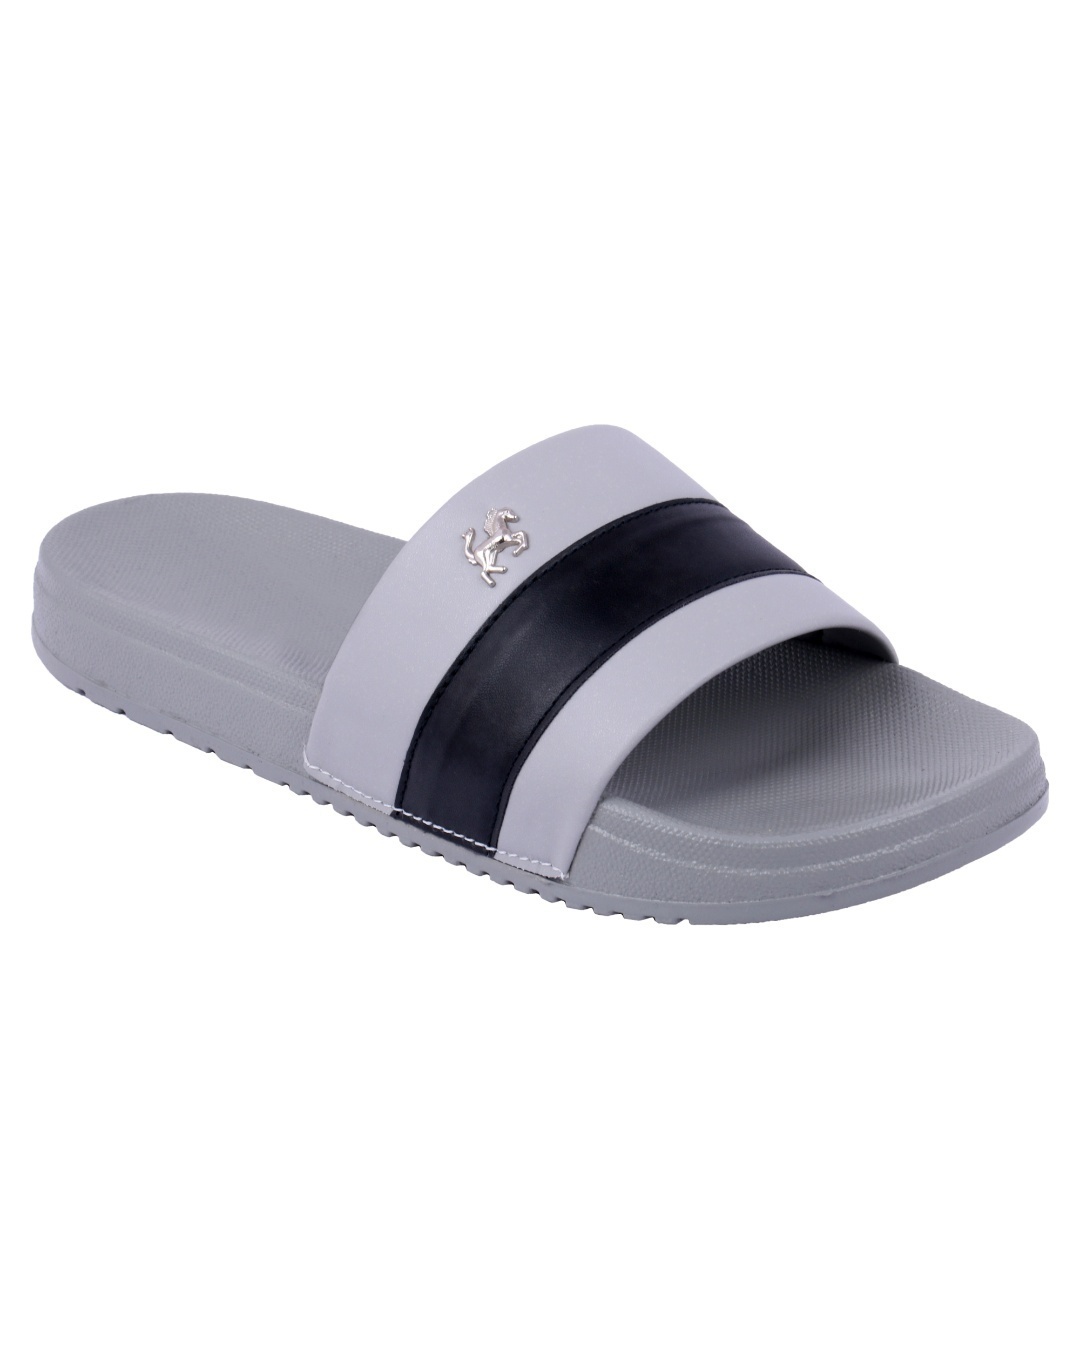 Shop Men's Grey Slip-On Sliders-Design